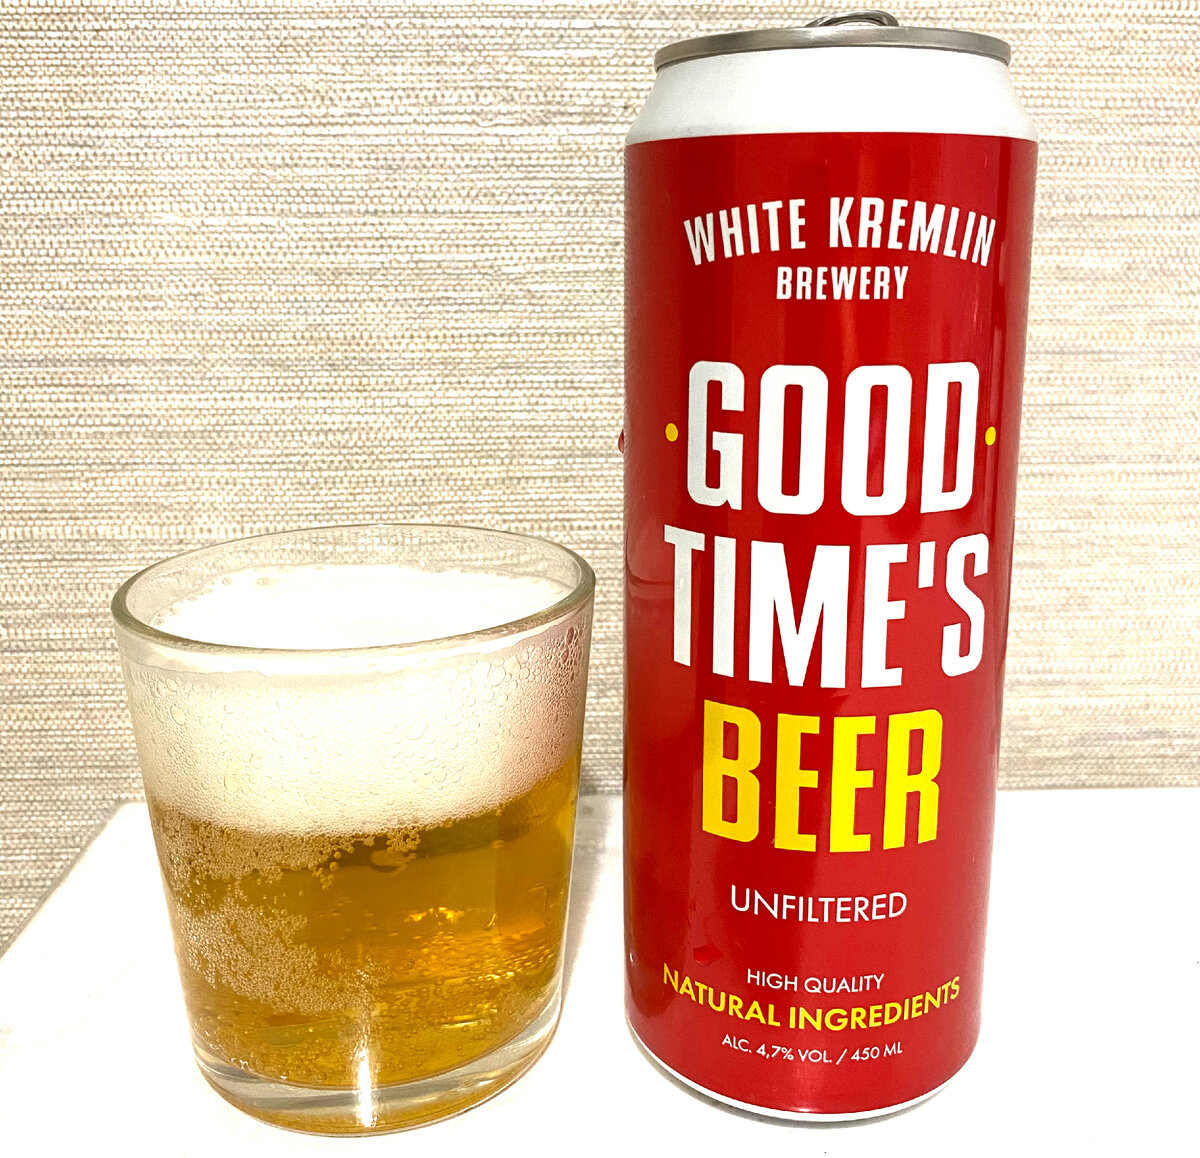 Good beer. Пиво 7,0 лагер. Гуд Таймс пиво. White Kremlin пиво good times Beer.